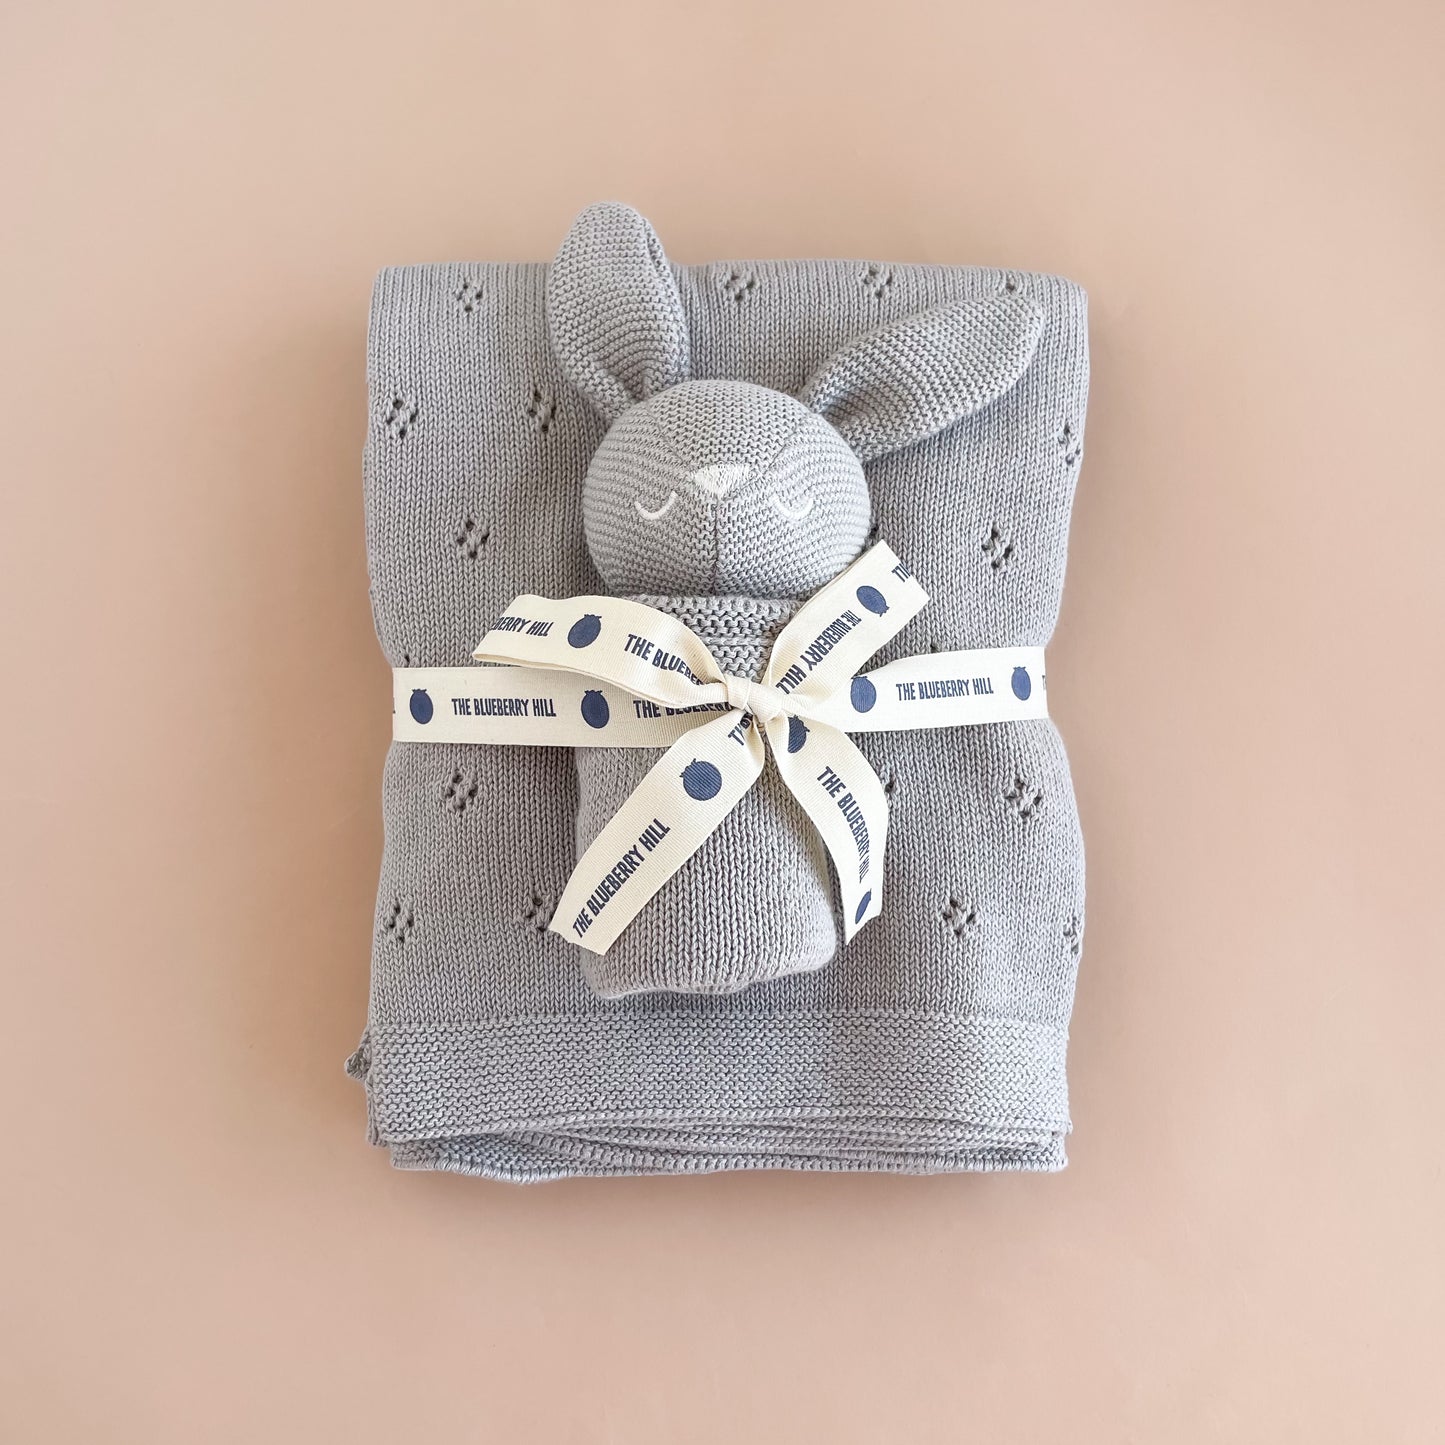 Pique Blanket & Bunny Lovey Gift Set, Grey